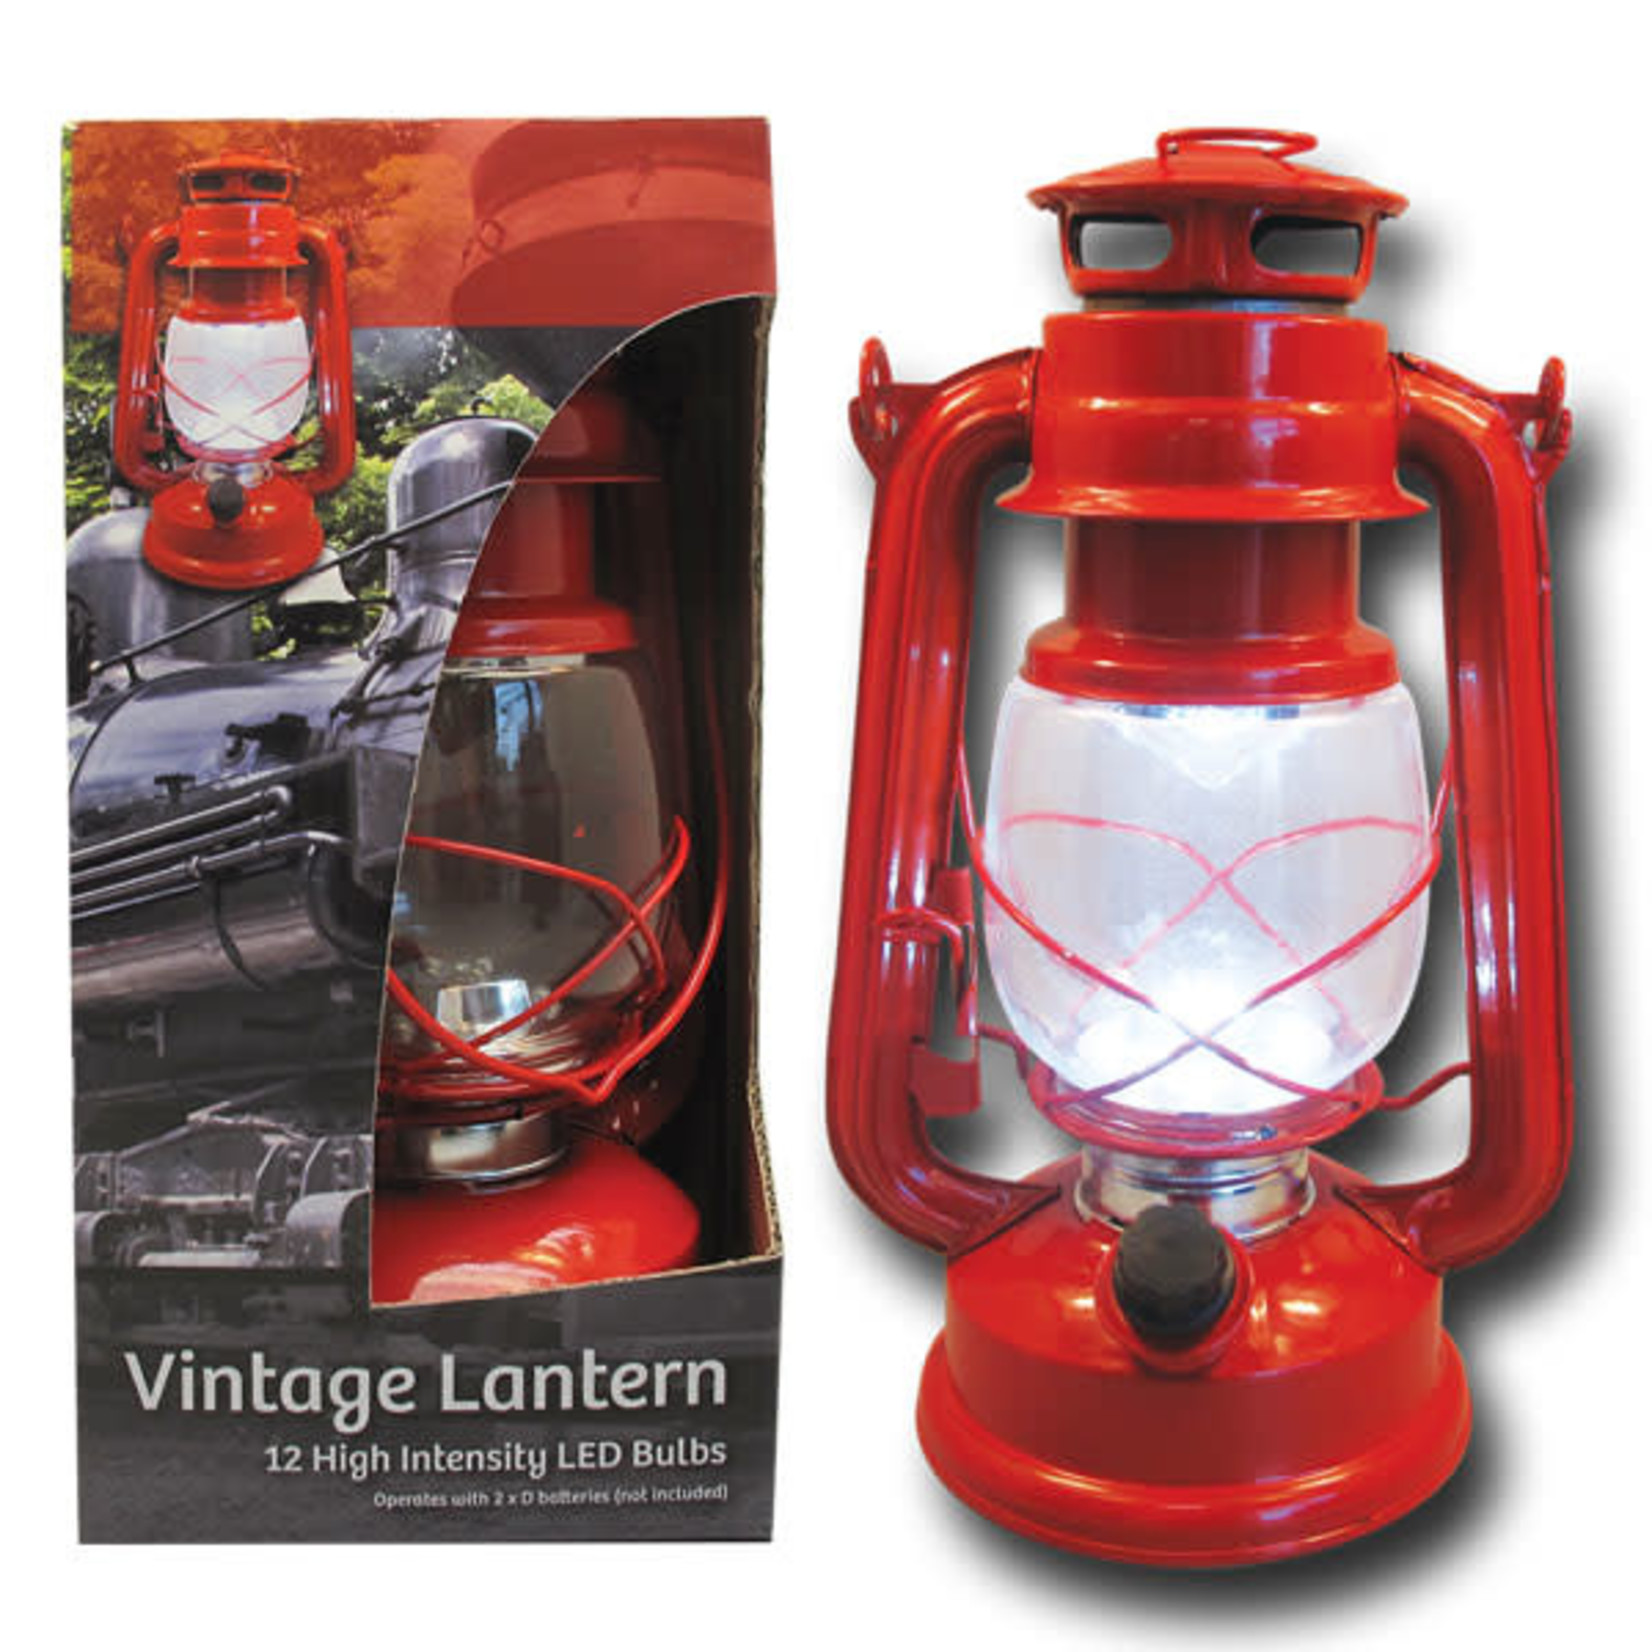 This LED Lantern Has Retro Looks